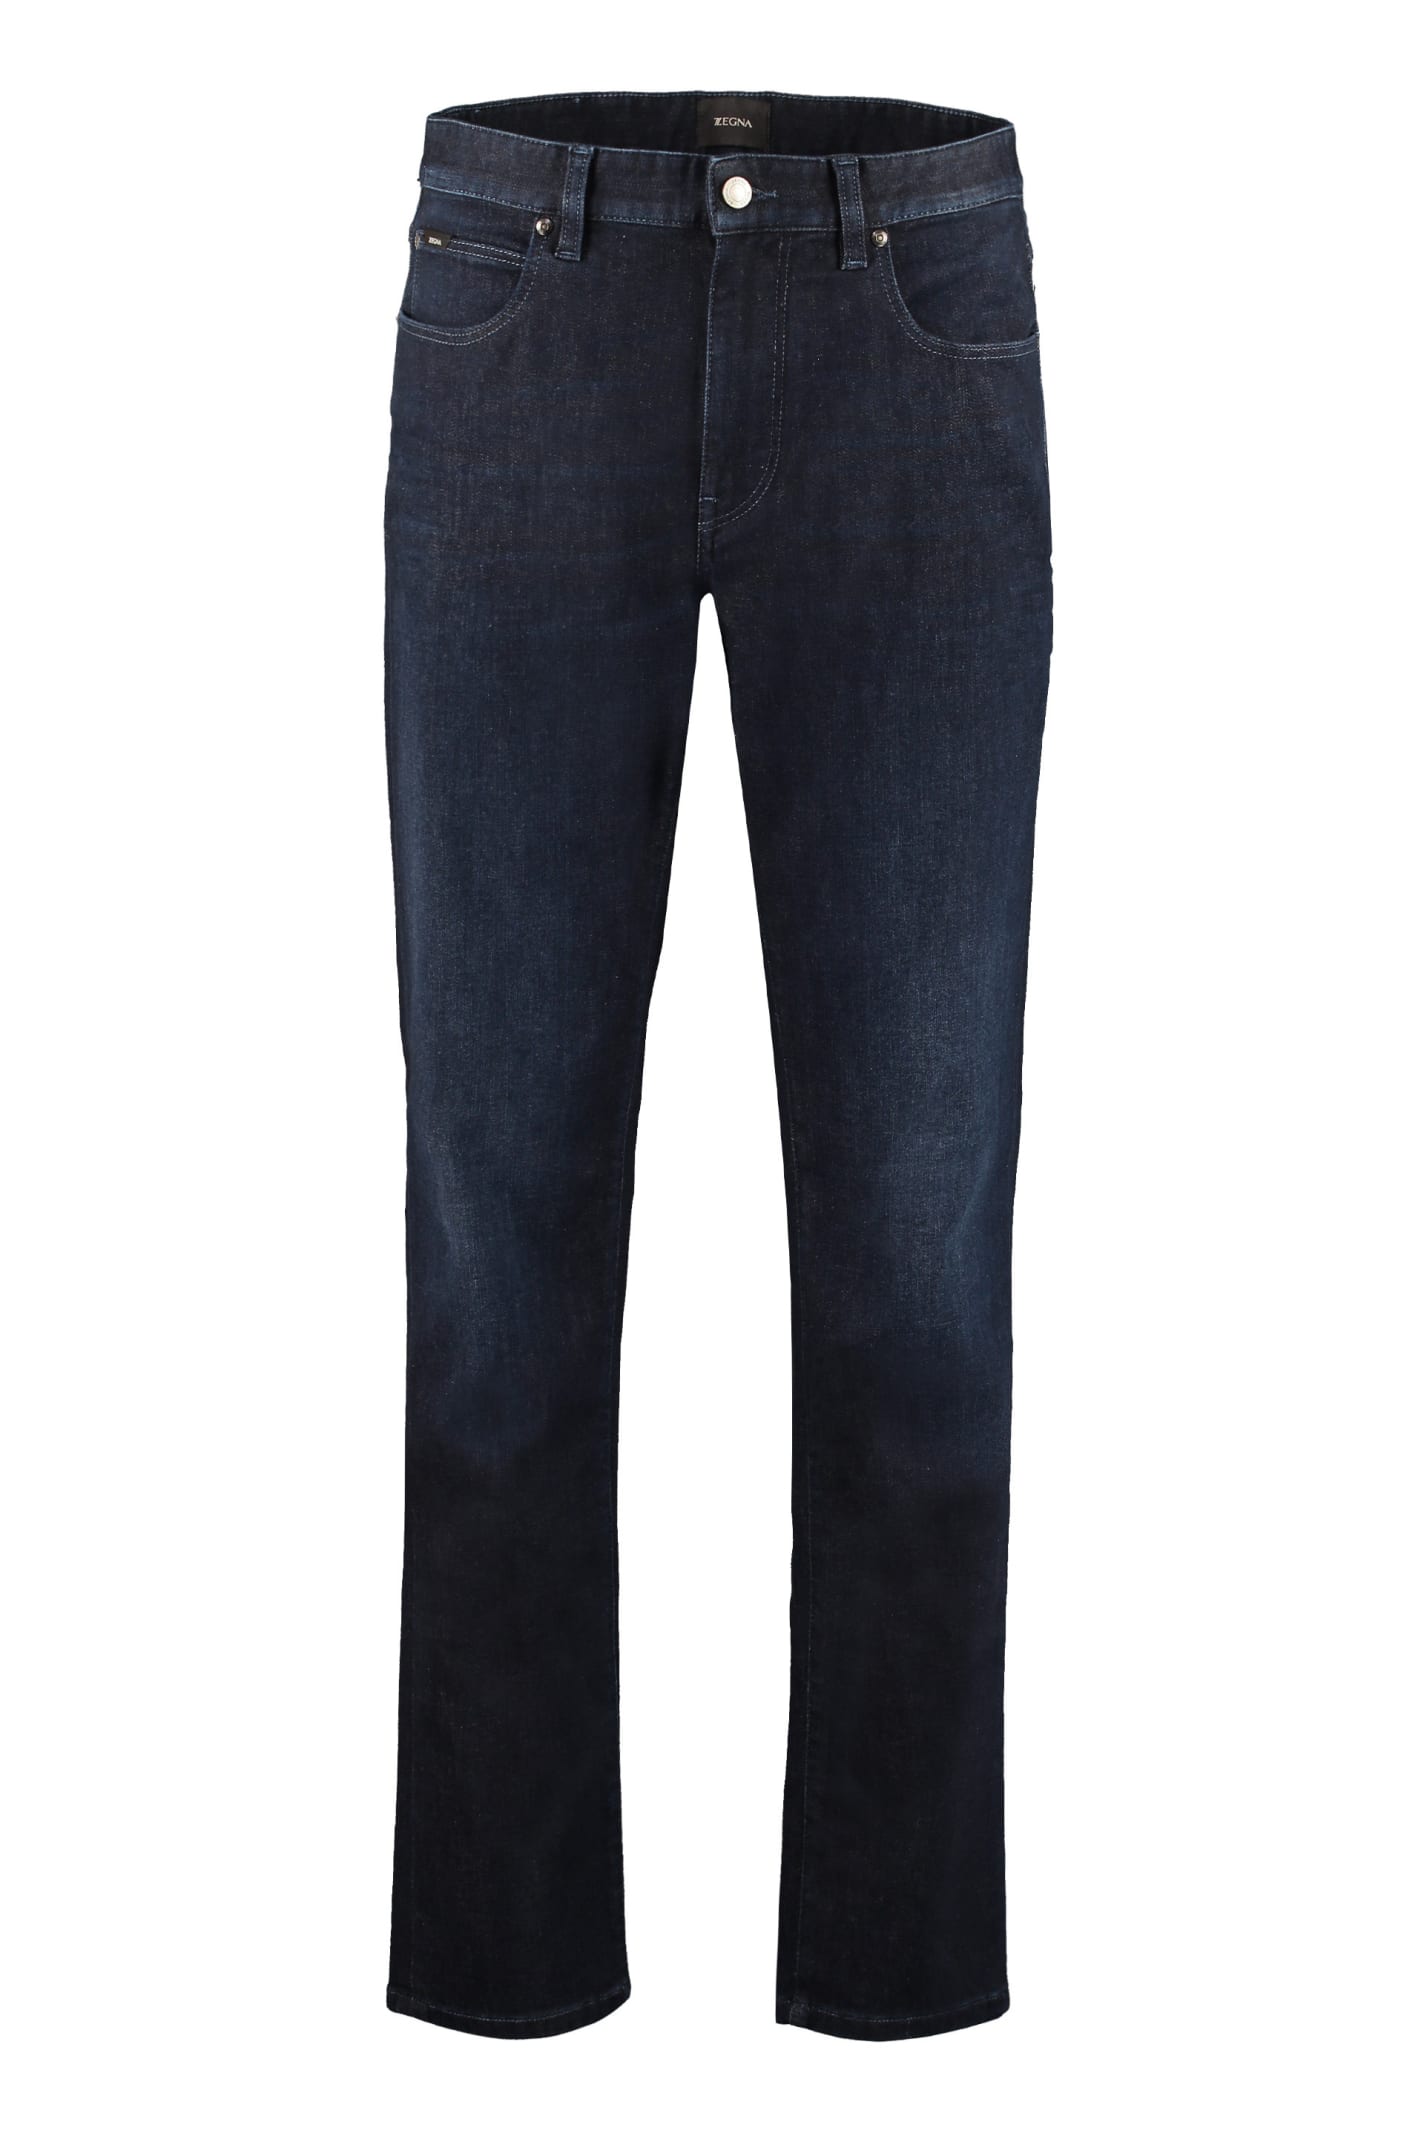 Z Zegna 5-pocket Straight-leg Jeans